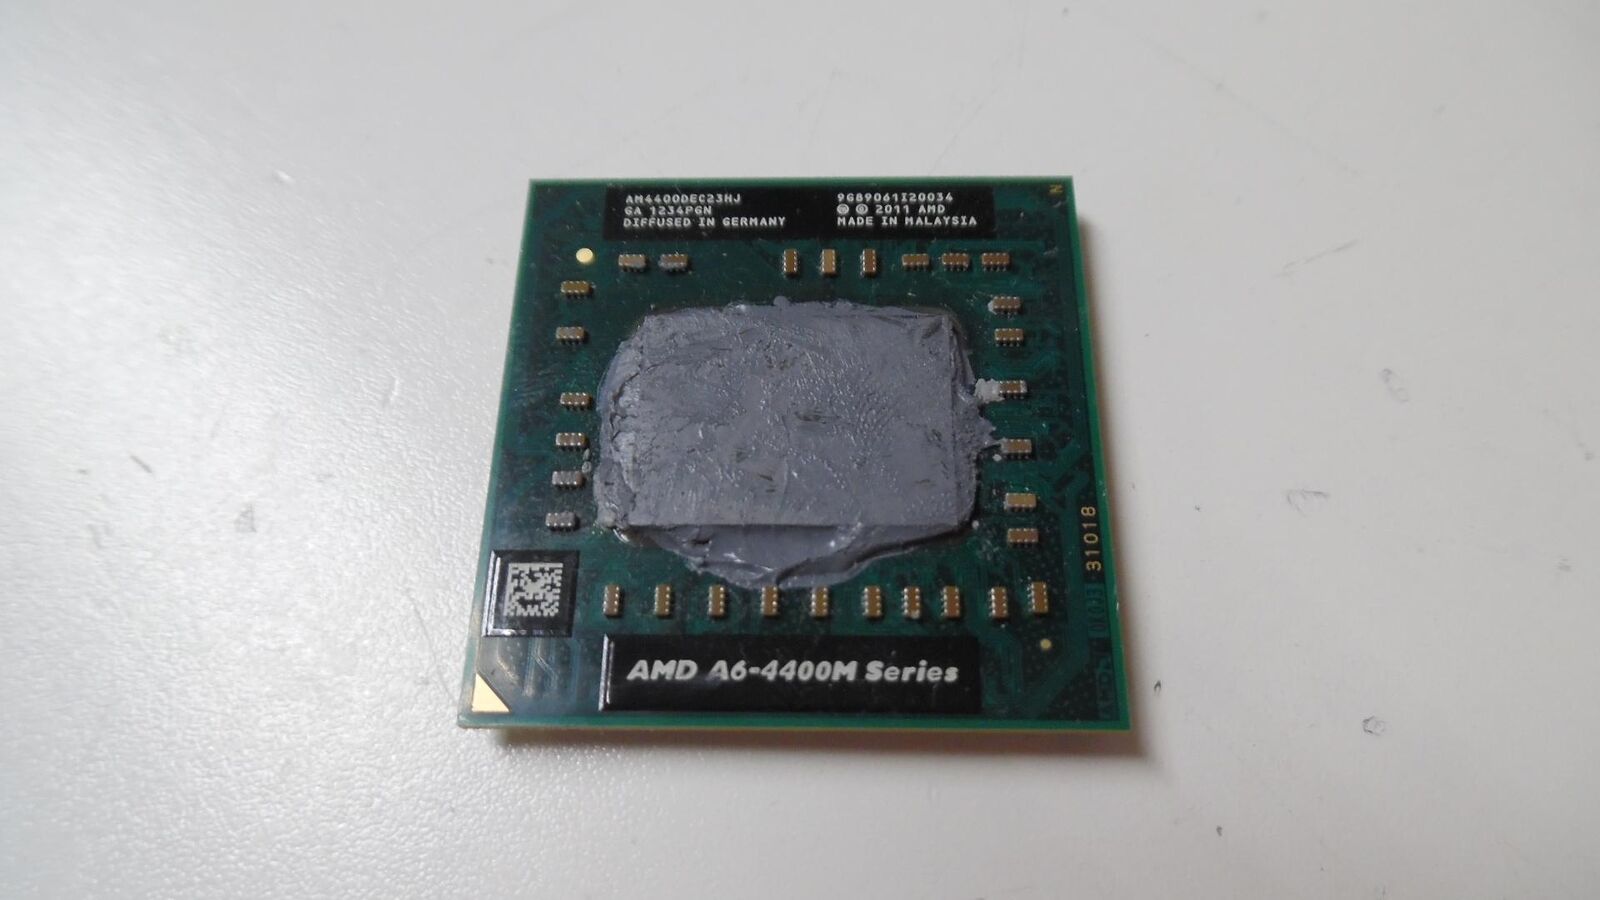 Genuine AMD A6-4400M@2.70GHz Laptop CPU - AM4400DEC23HJ - Tested